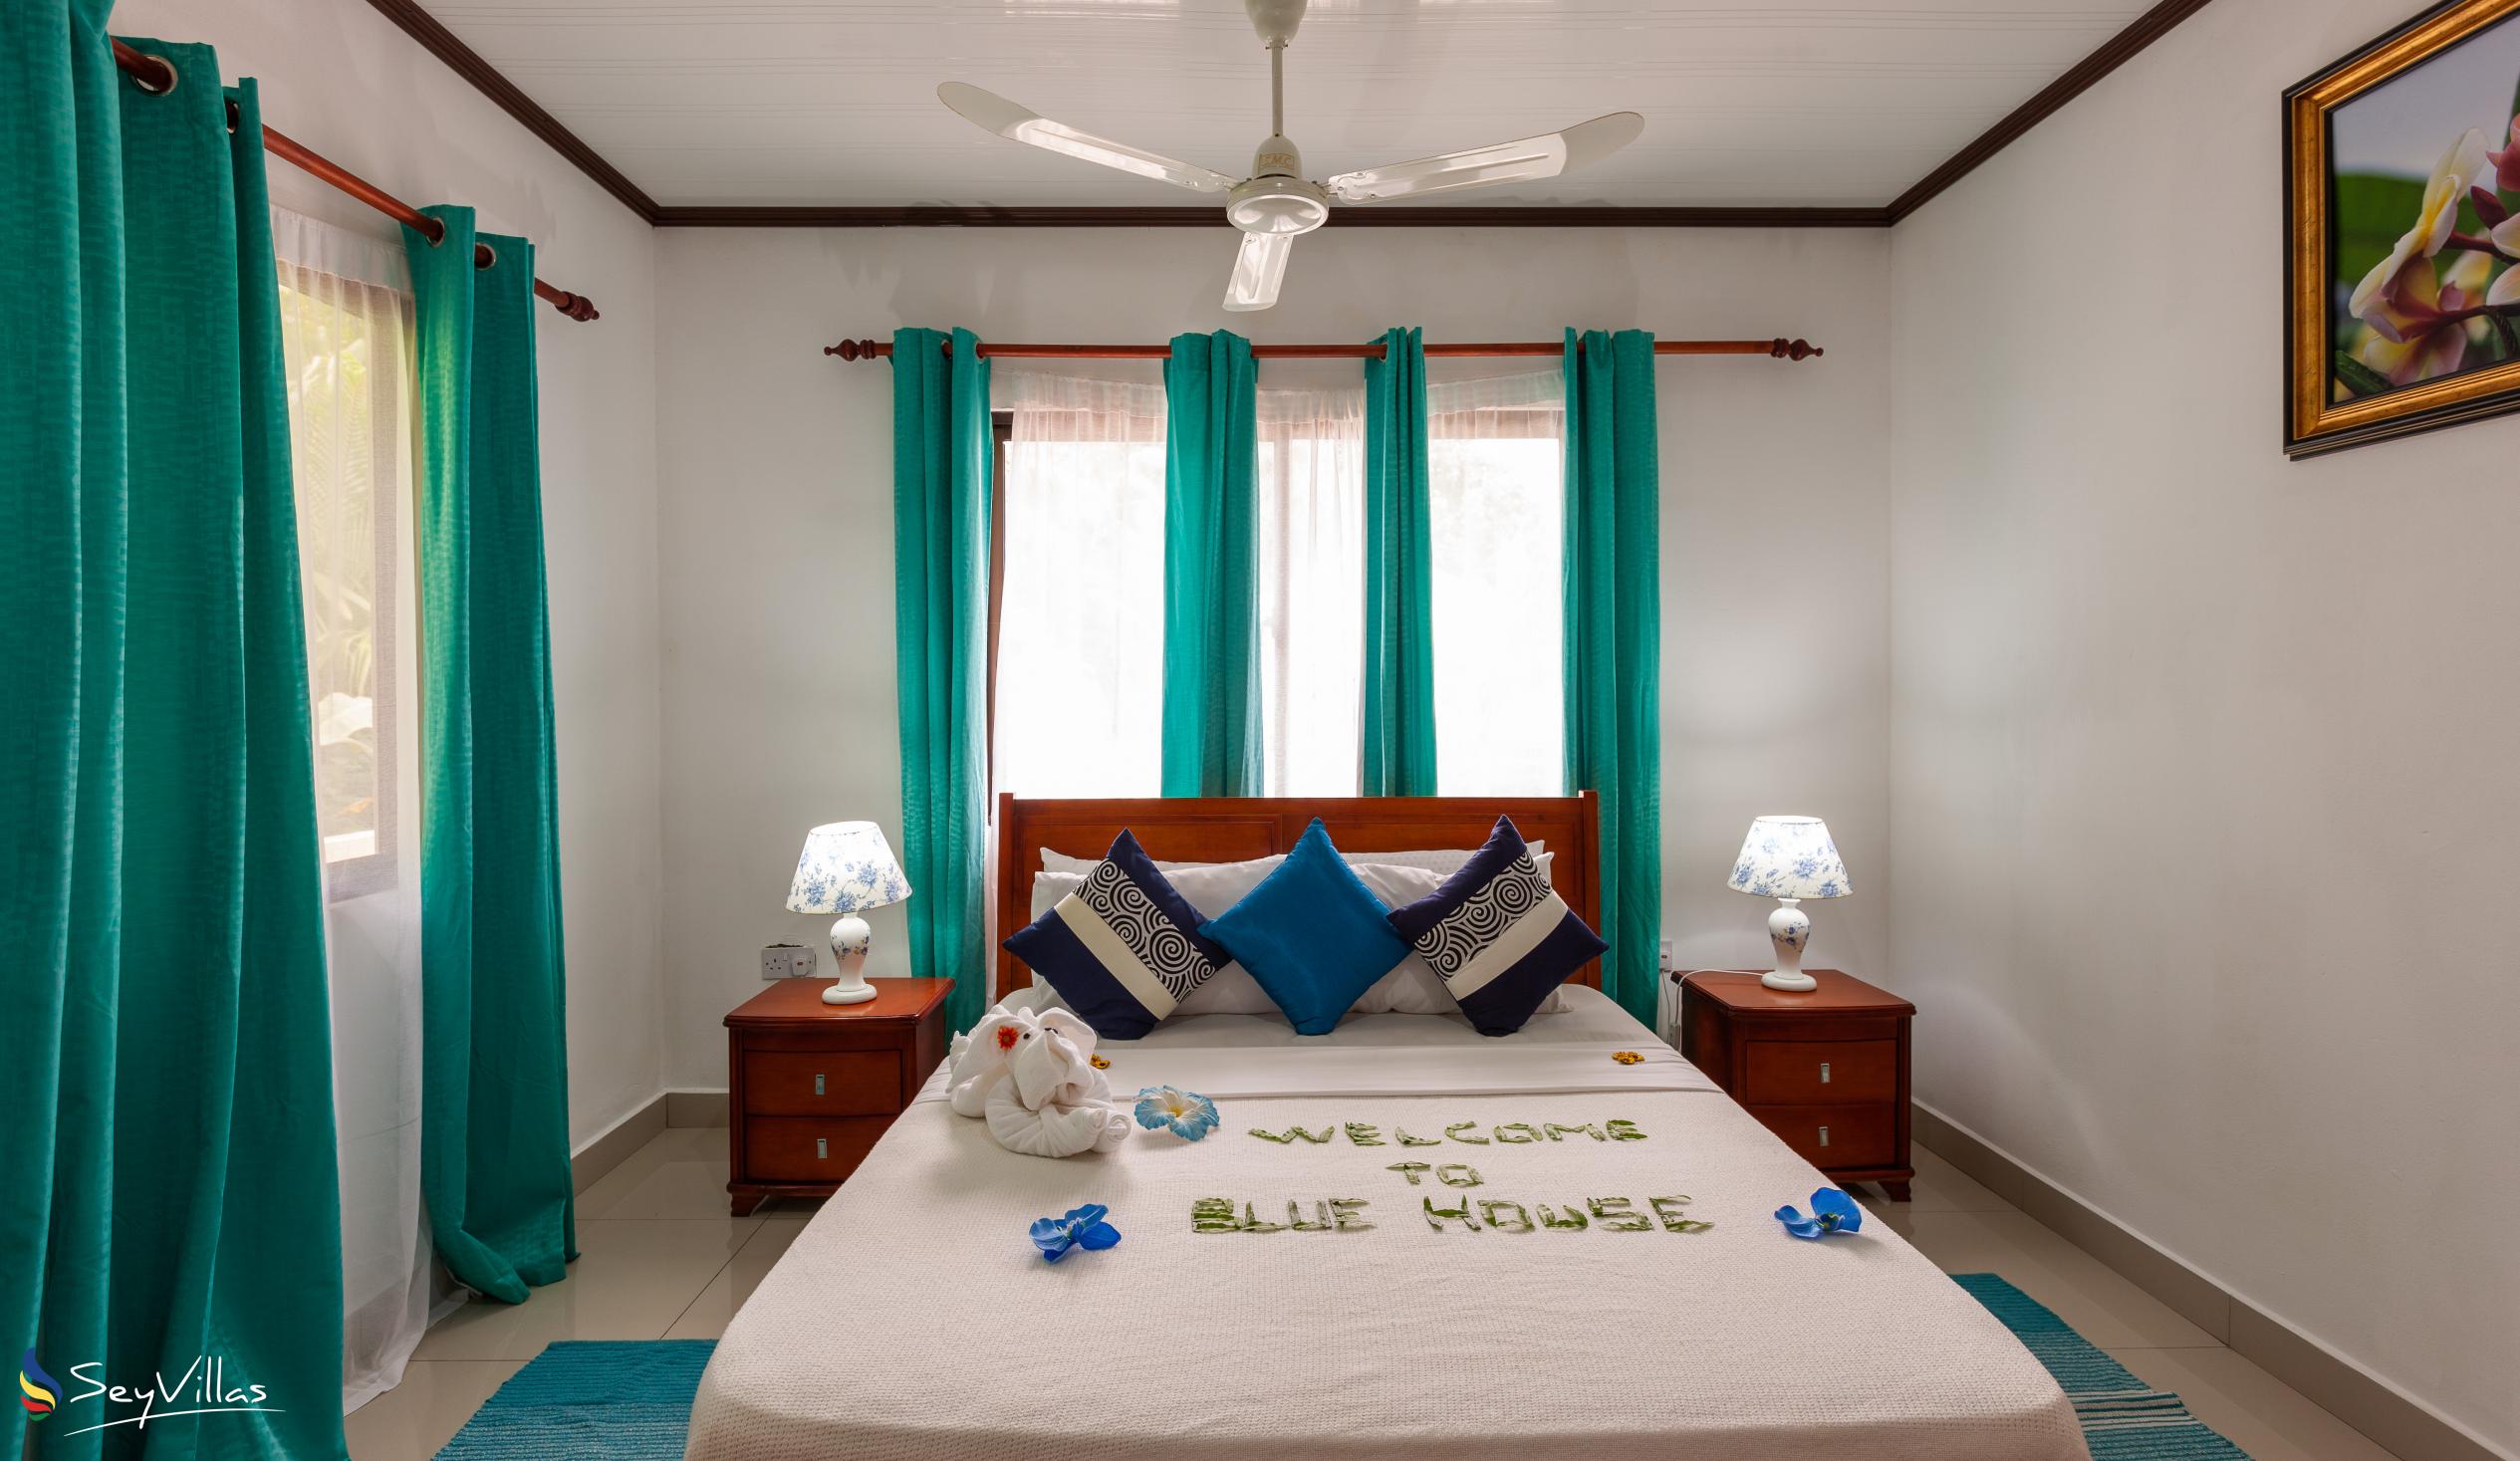 Photo 47: Belle Vacance Self Catering - 1-Bedroom Apartment - Praslin (Seychelles)